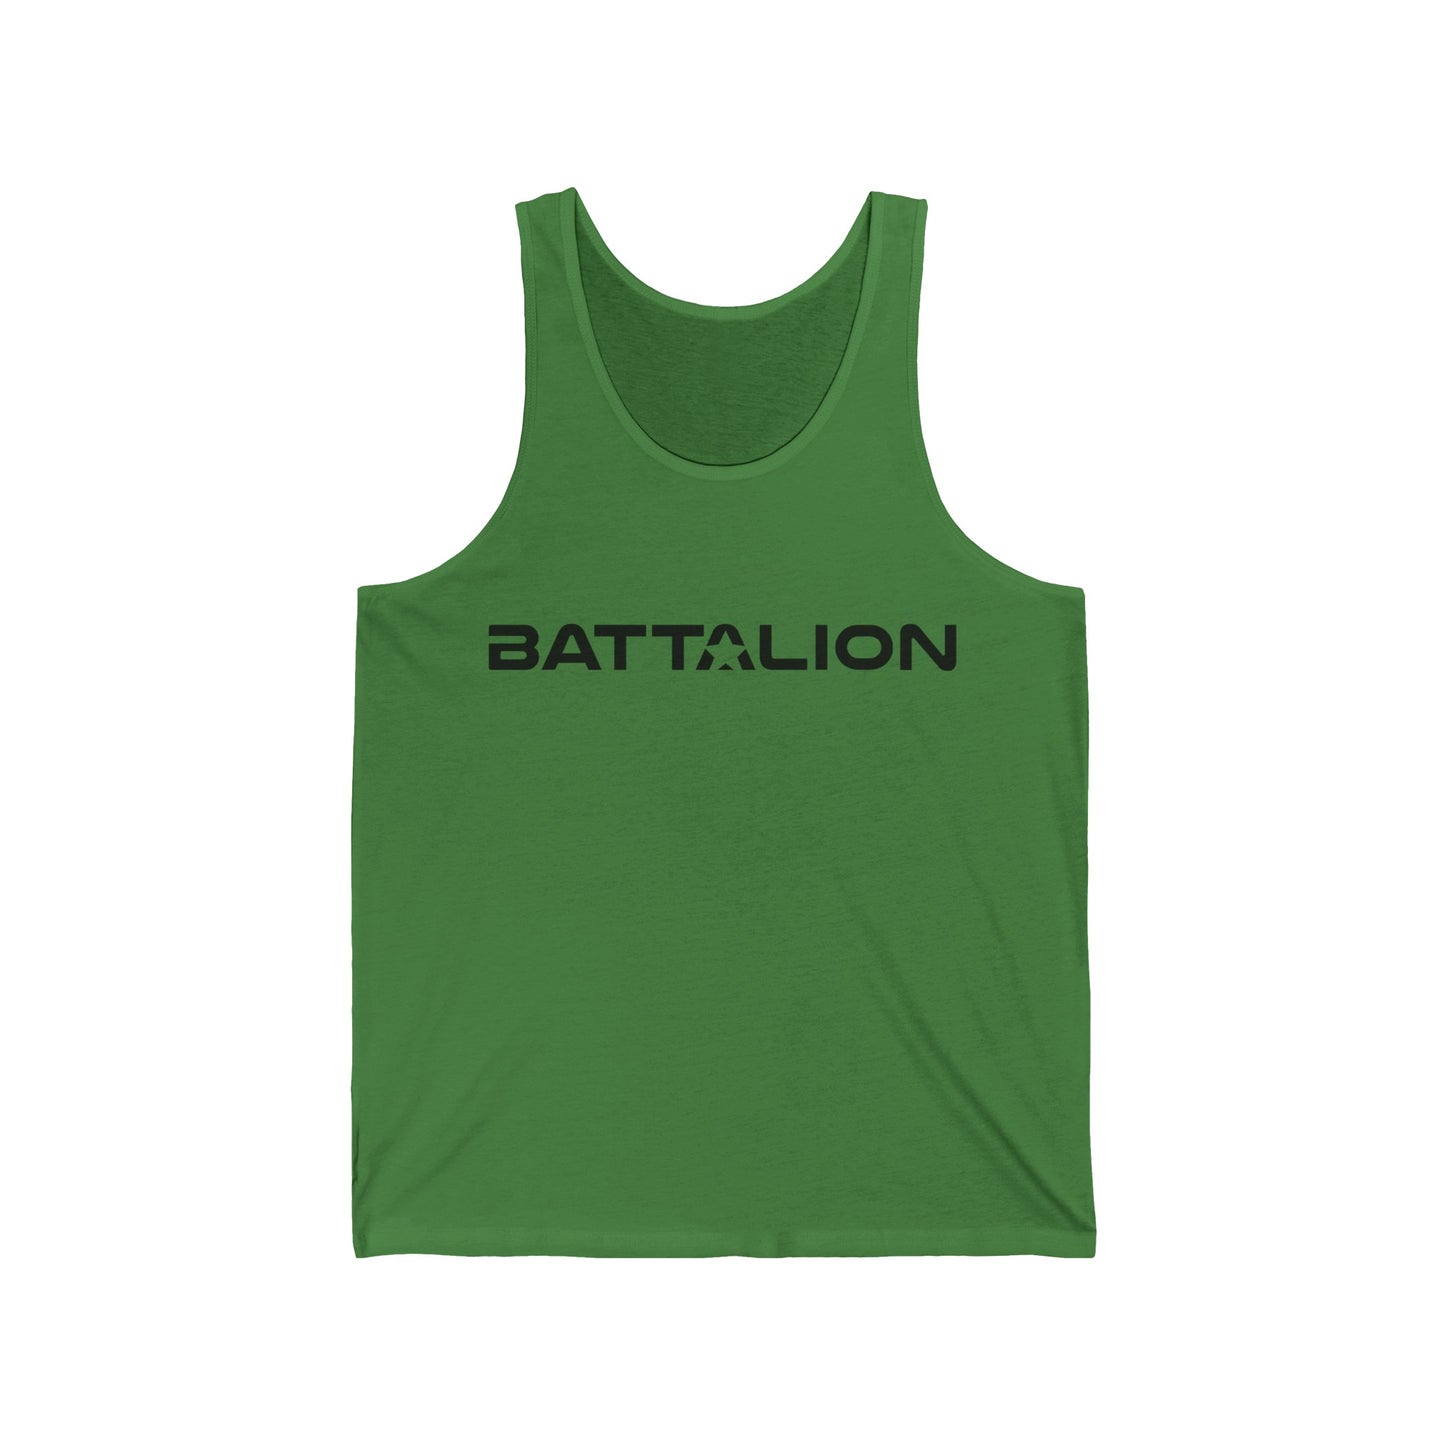 BATTALION - Unisex Jersey Tank